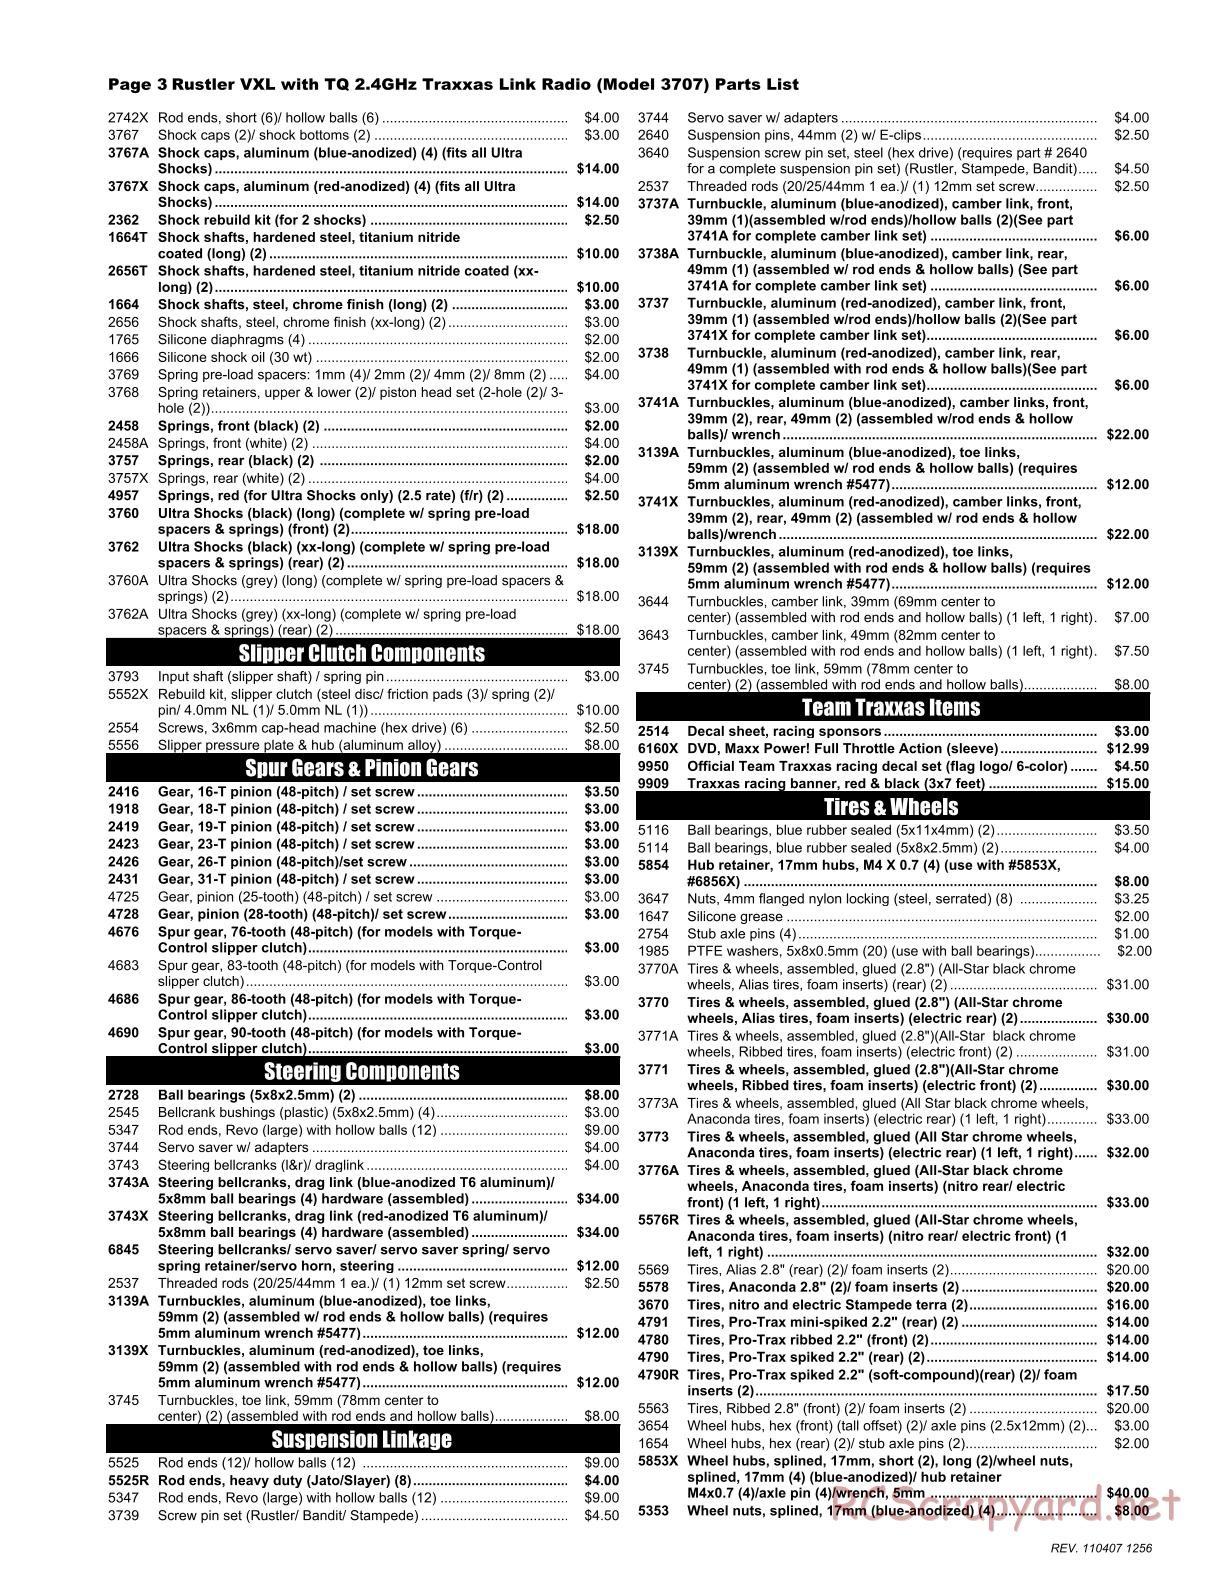 Traxxas - Rustler VXL - Parts List - Page 3